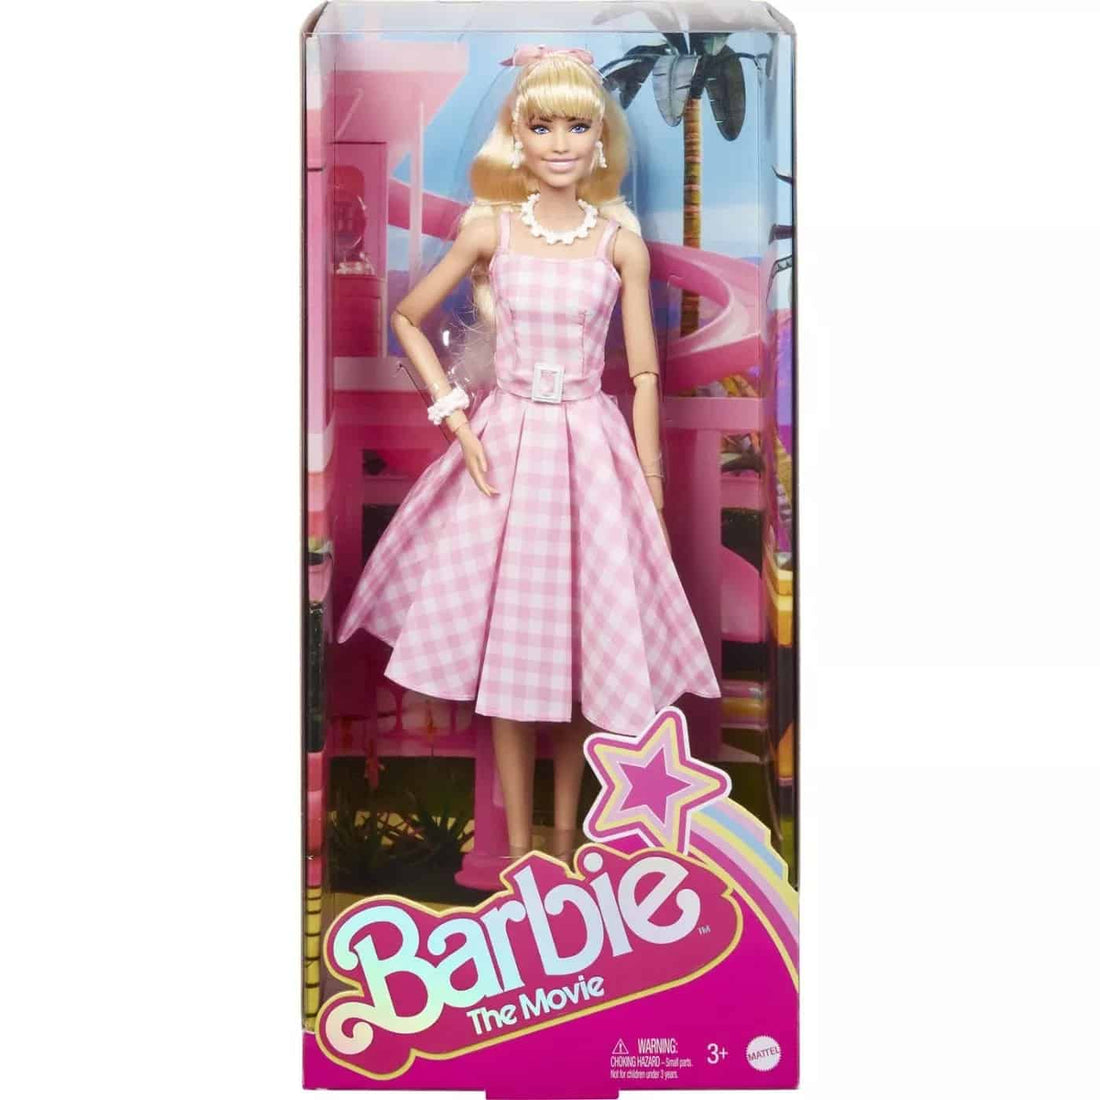 Mattel Barbie Movie Pink Gingham Dress